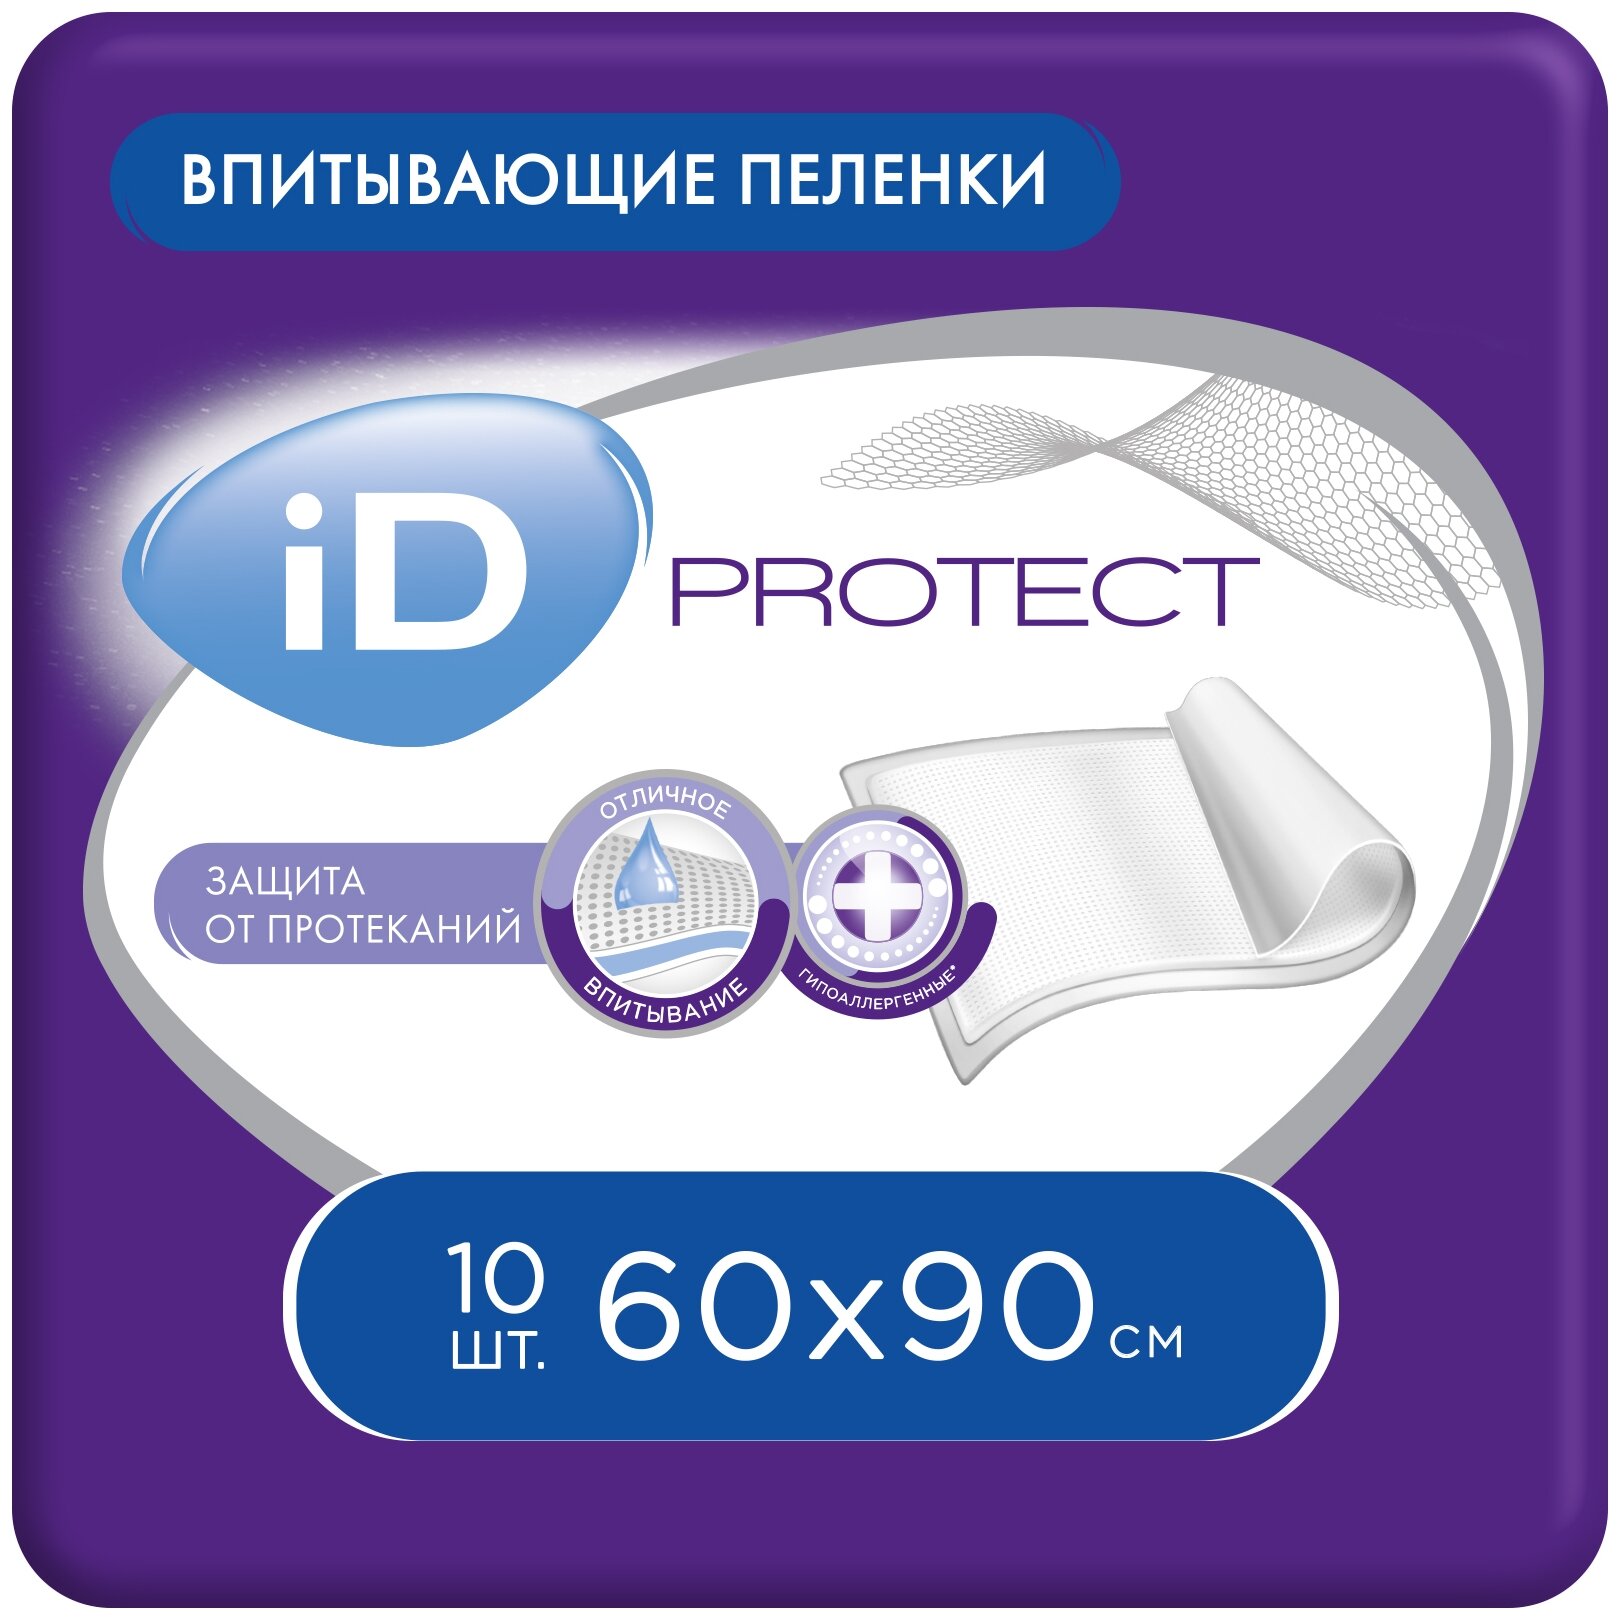 Пеленки iD Protect